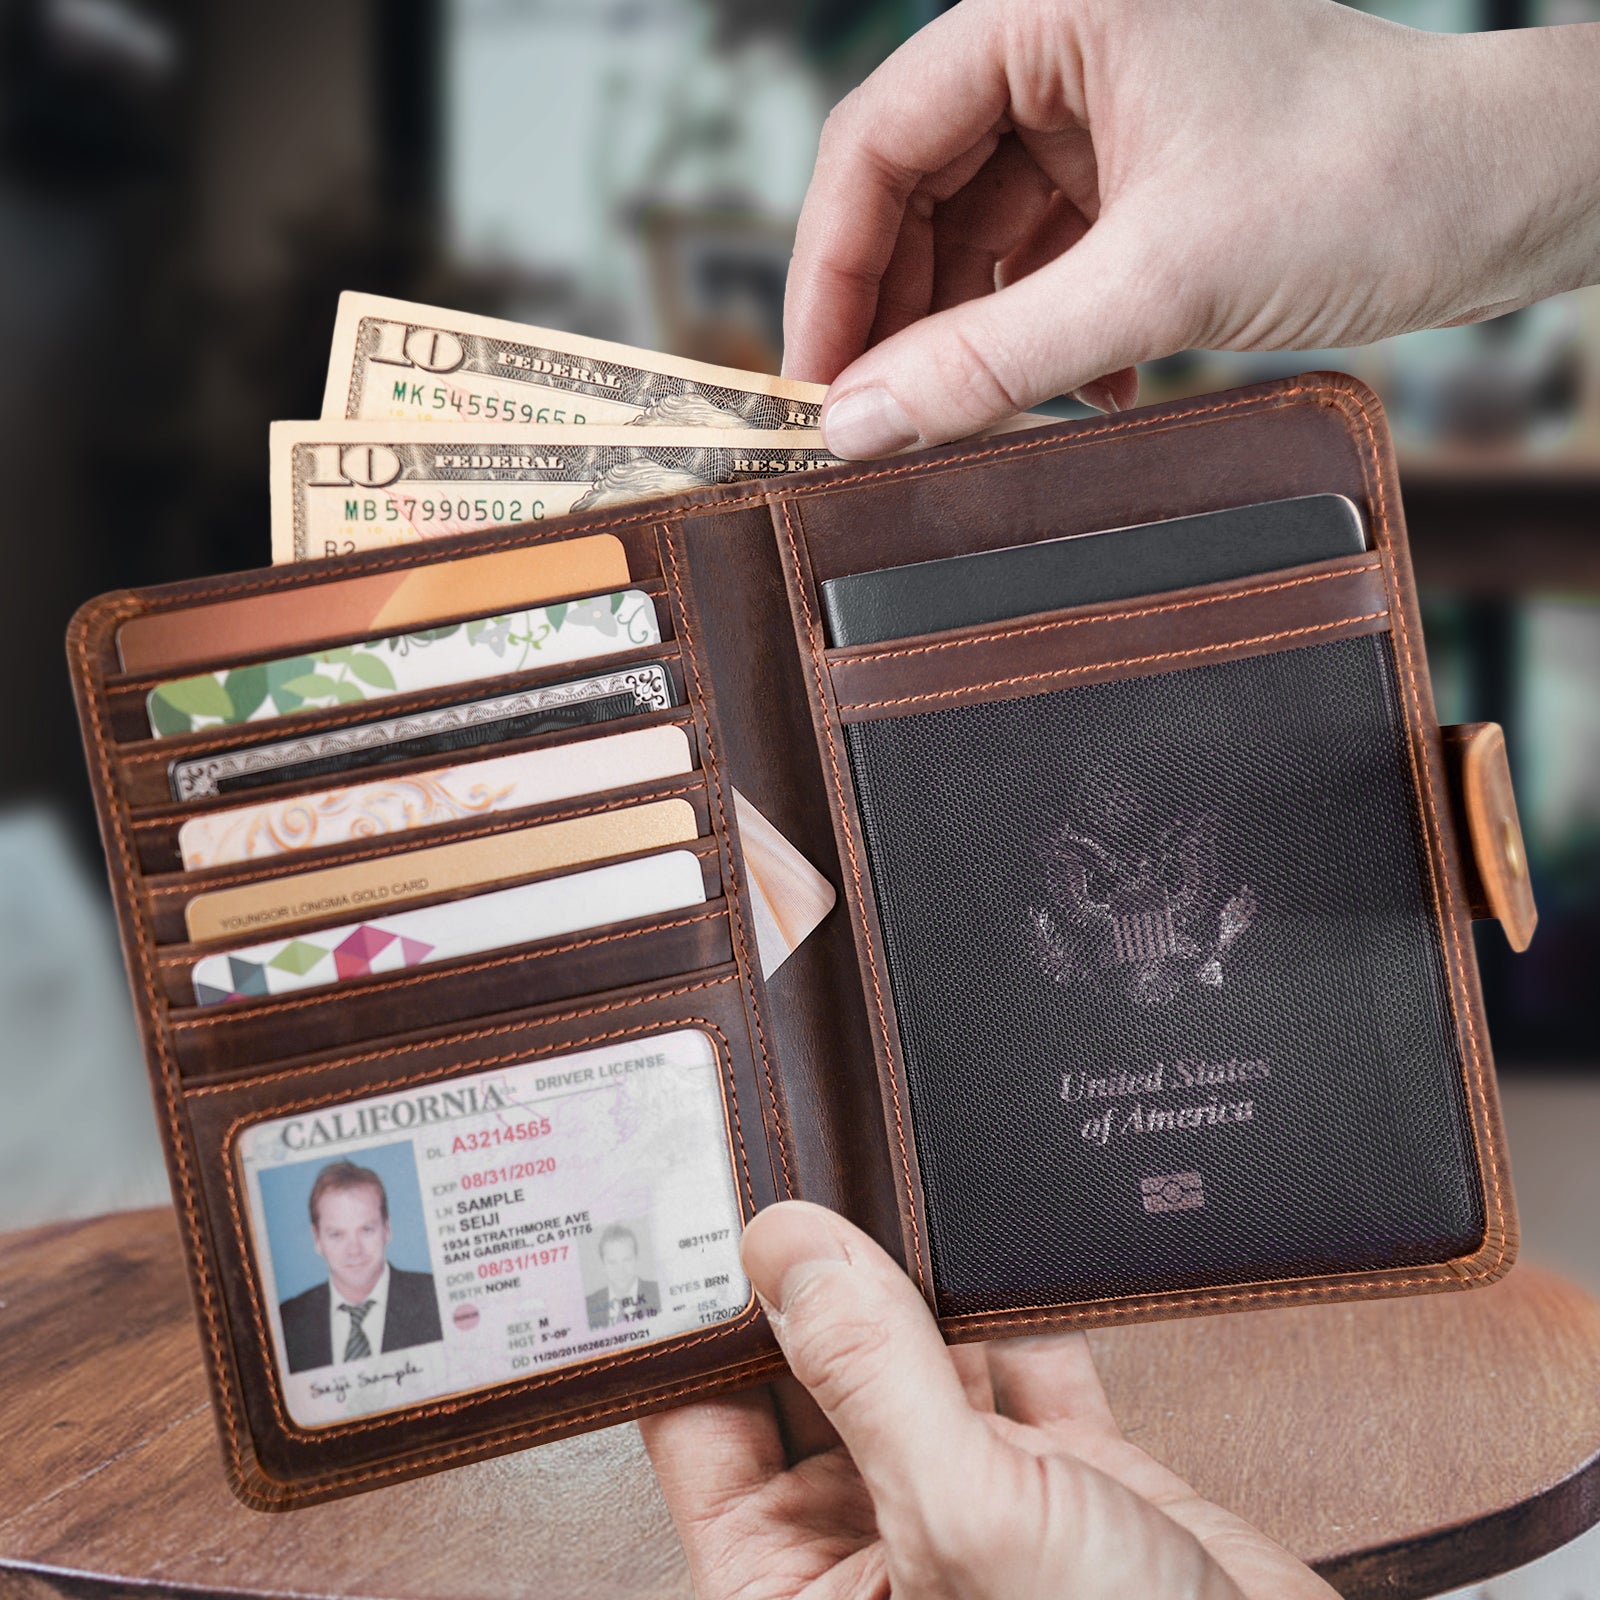 Polare Functional RFID Blocking Leather Passport Holder Travel Bifold  Wallet For Men